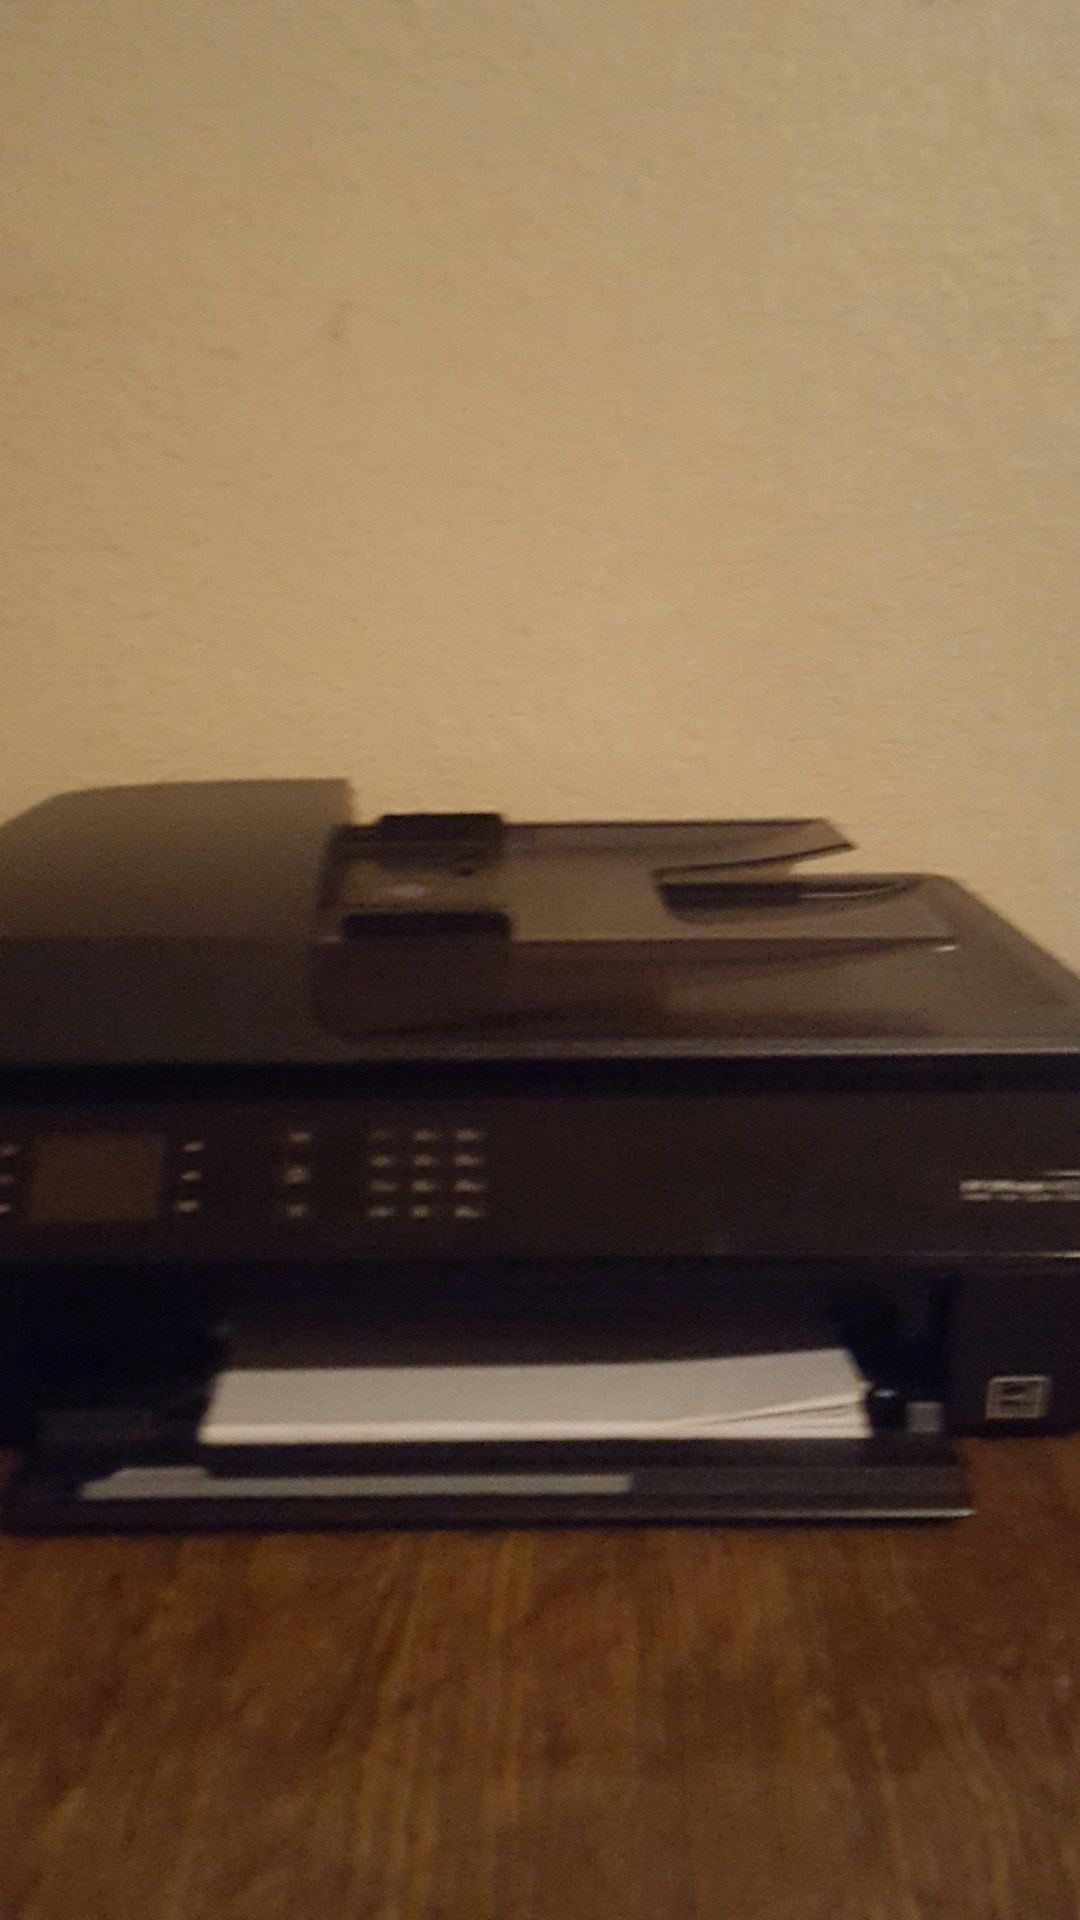 HP printer 4635